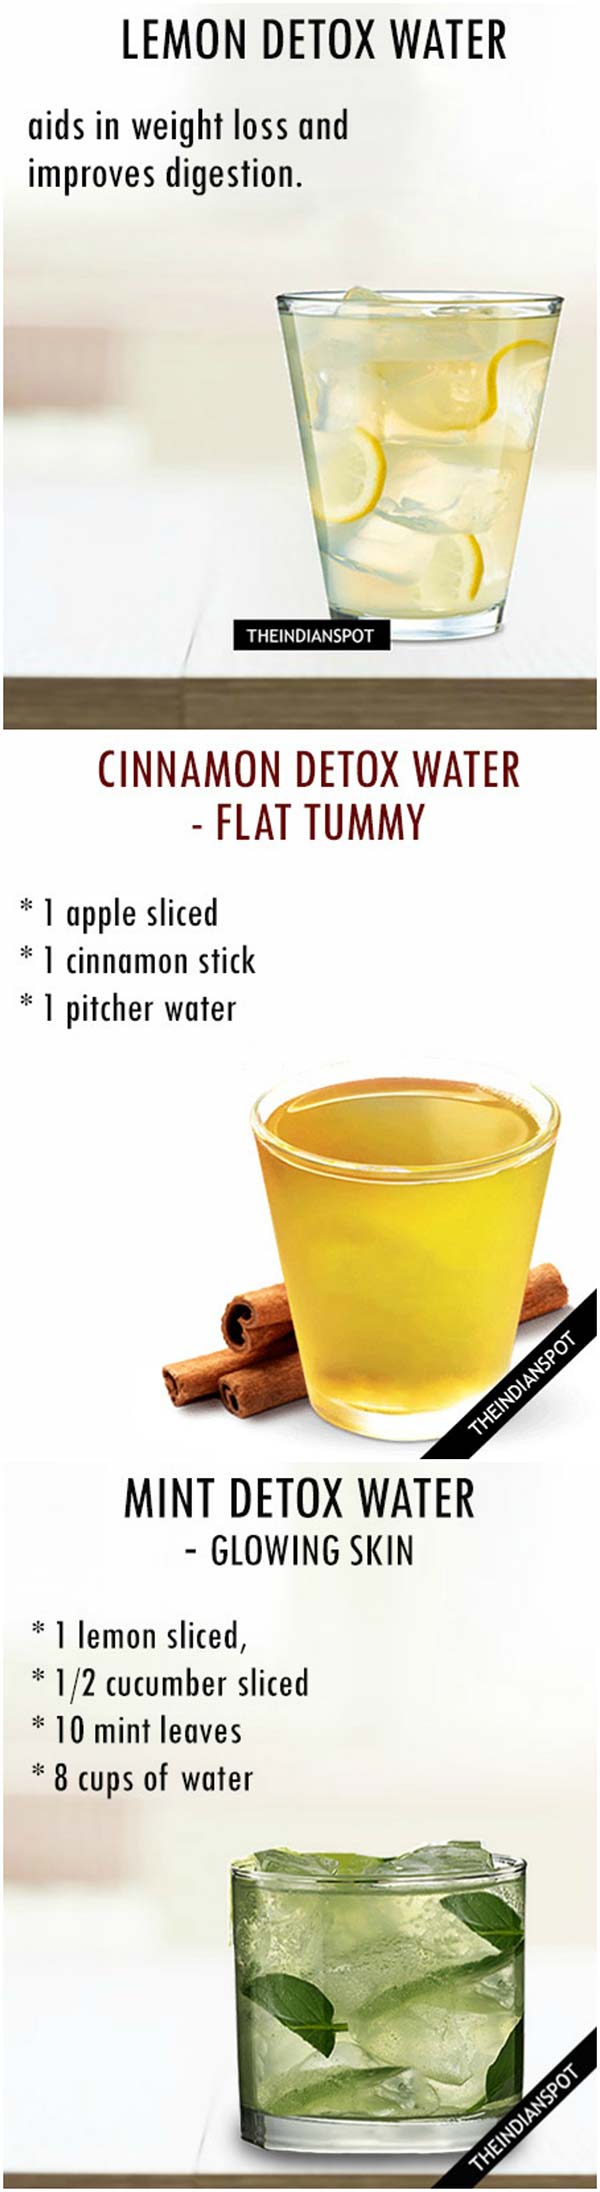 Apple Cinnamon flat tummy detox water: